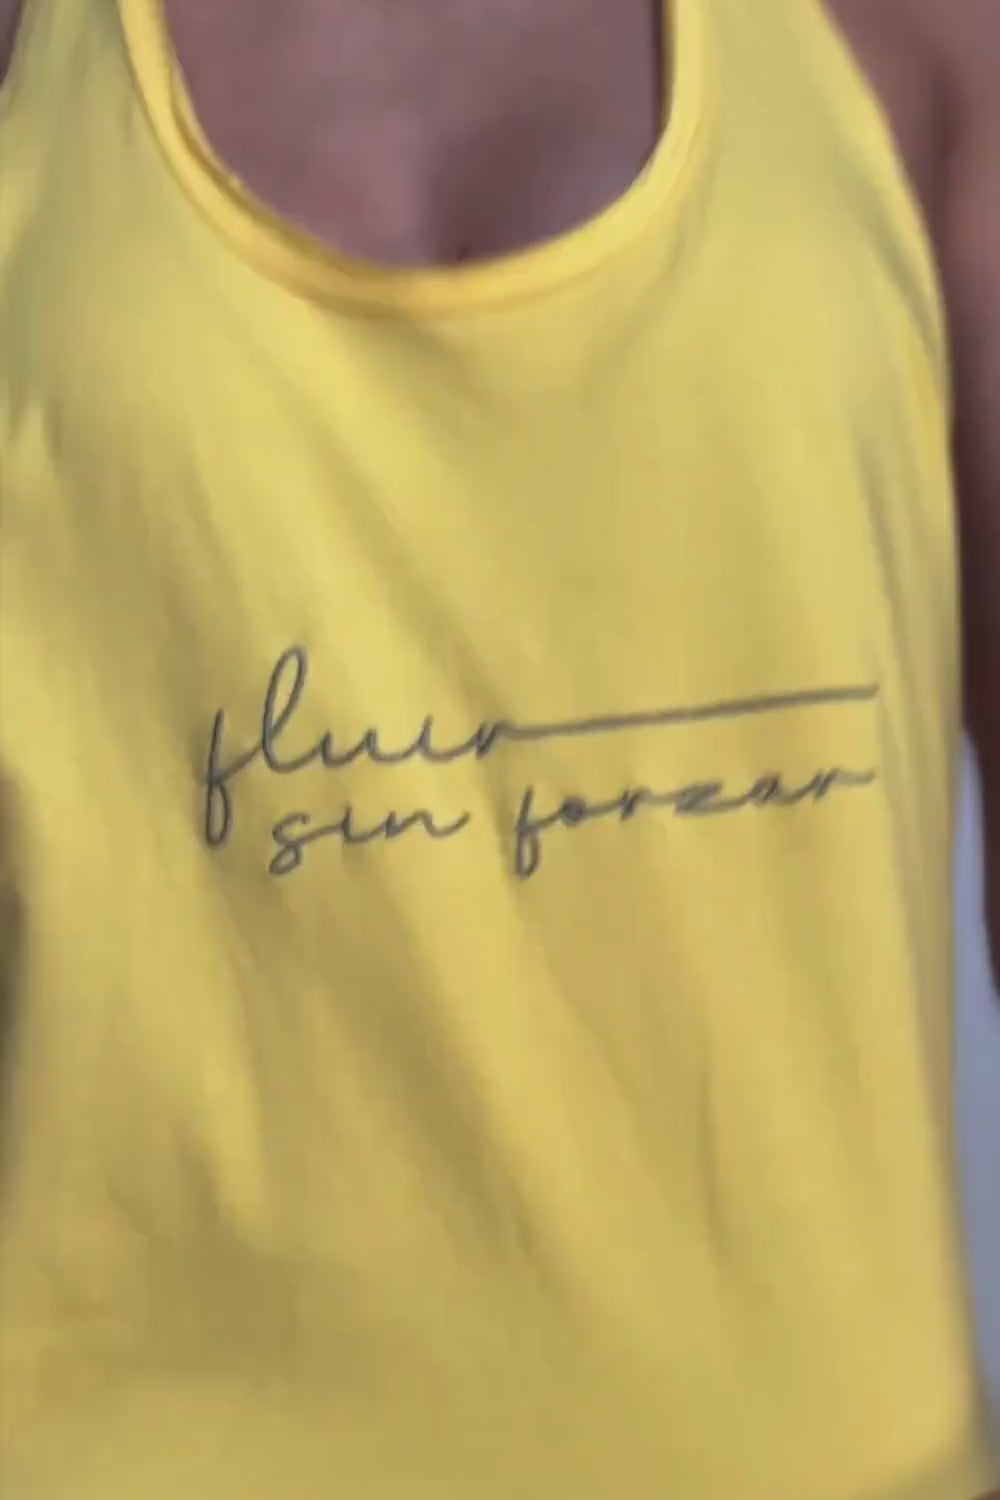 Camiseta Fluir Tank, modelo estilo nadadora en color amarilla Lemon Zest Yogimi. Camiseta tirantes holgada con mantra "Fluir sin forzar".